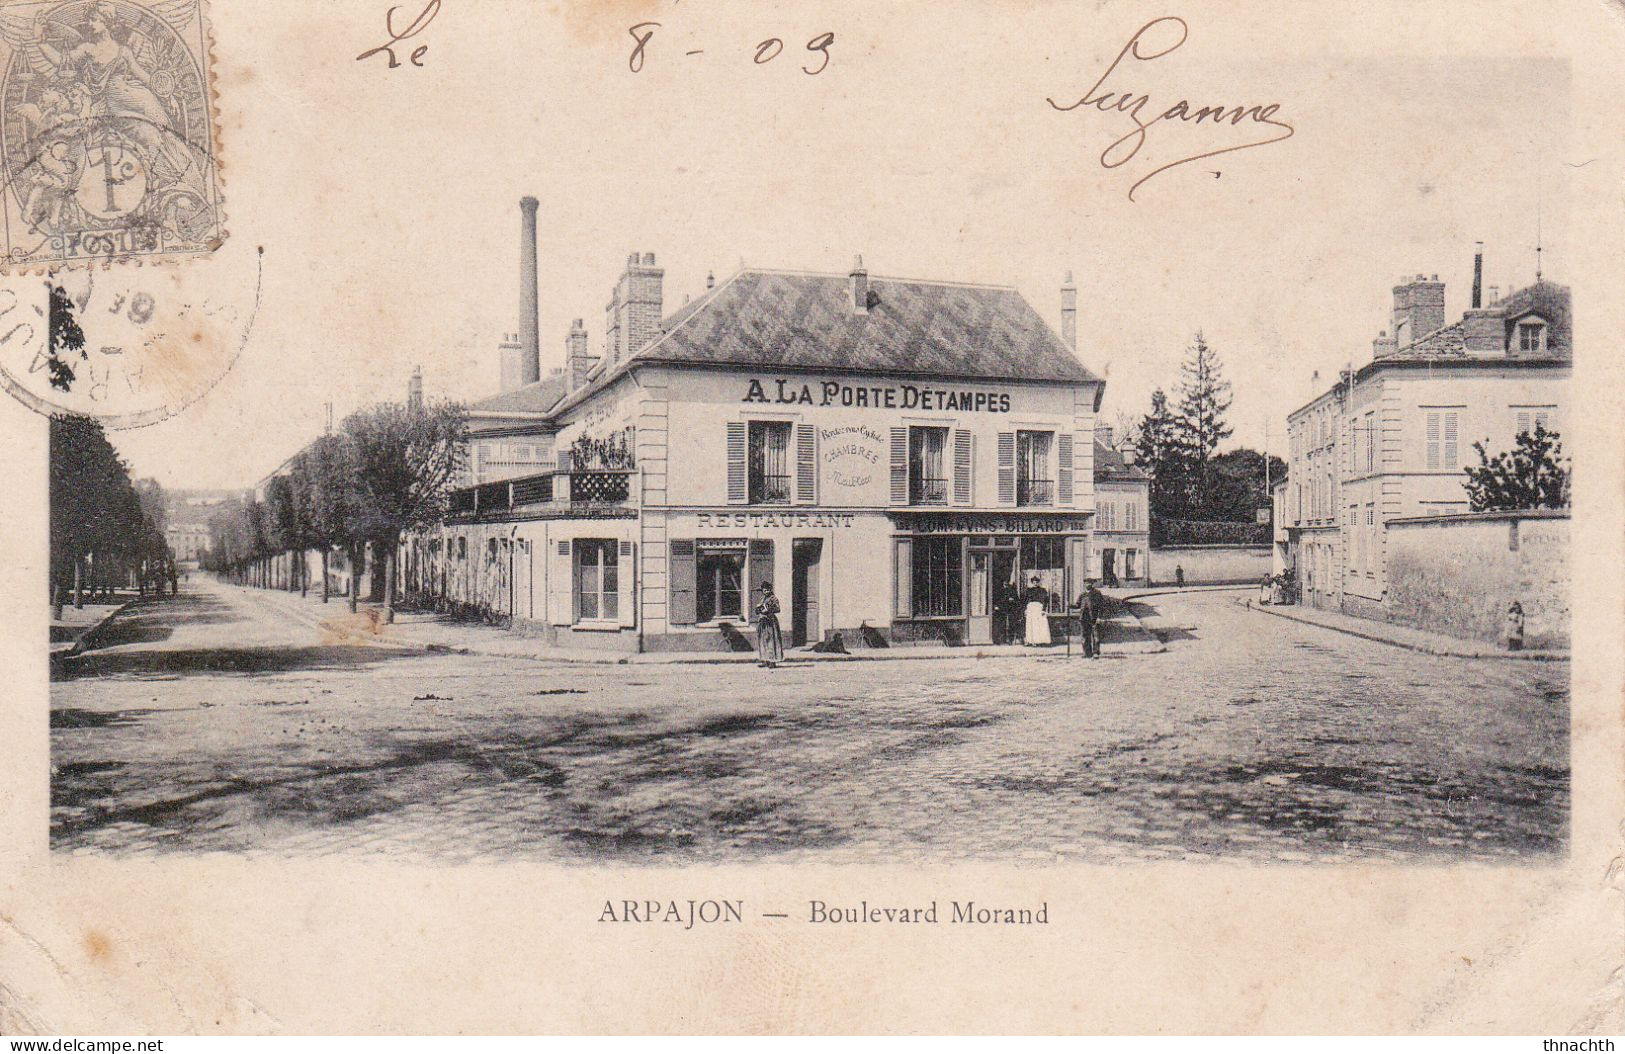 1909 Arpajon - Boulevard Morand - Restaurant "A La Porte D'Etampes" - Arpajon